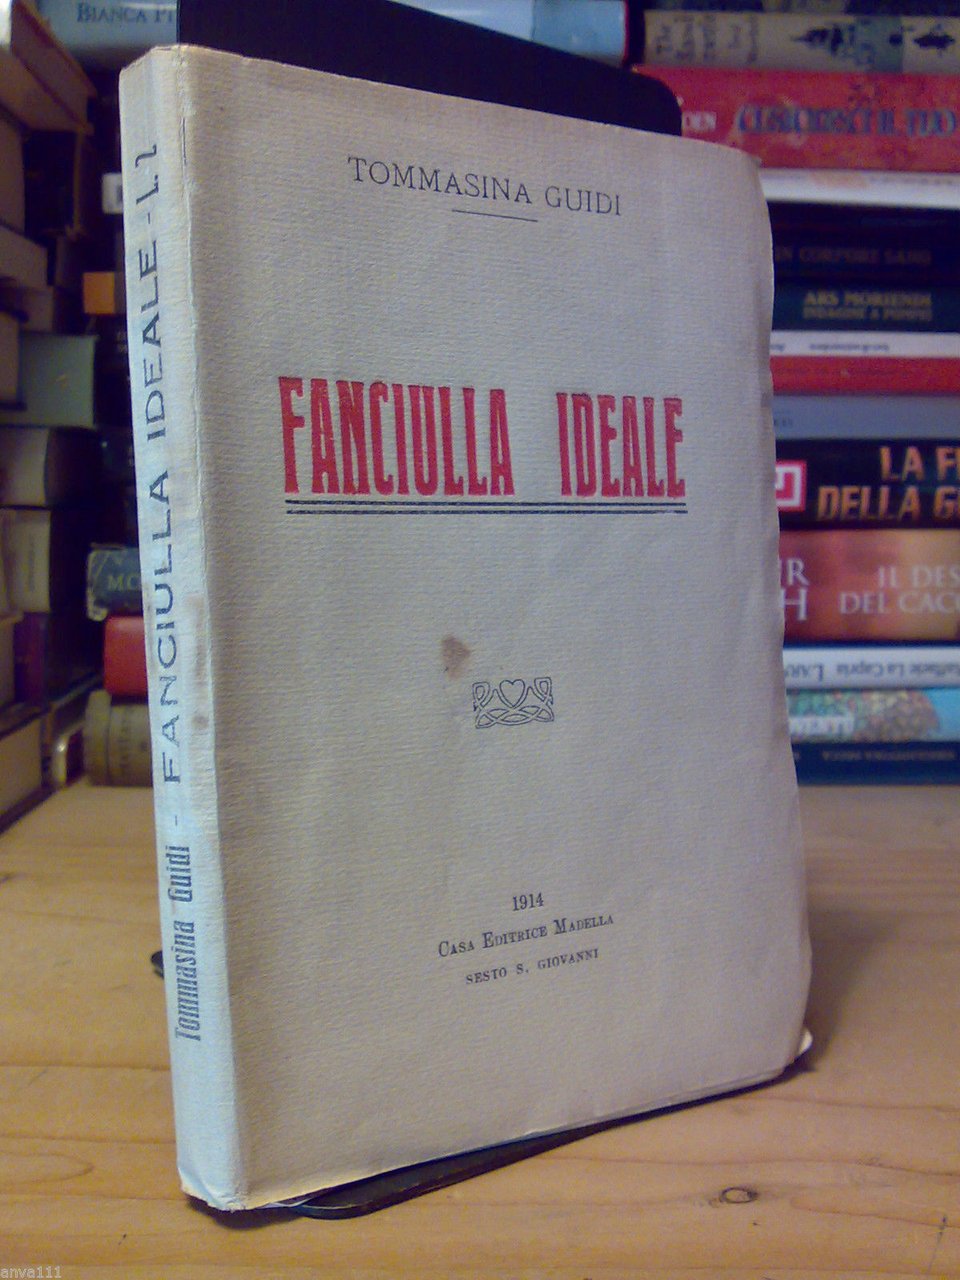 Tommasina Guidi - FANCIULLA IDEALE - Casa Editrice Madella 1914